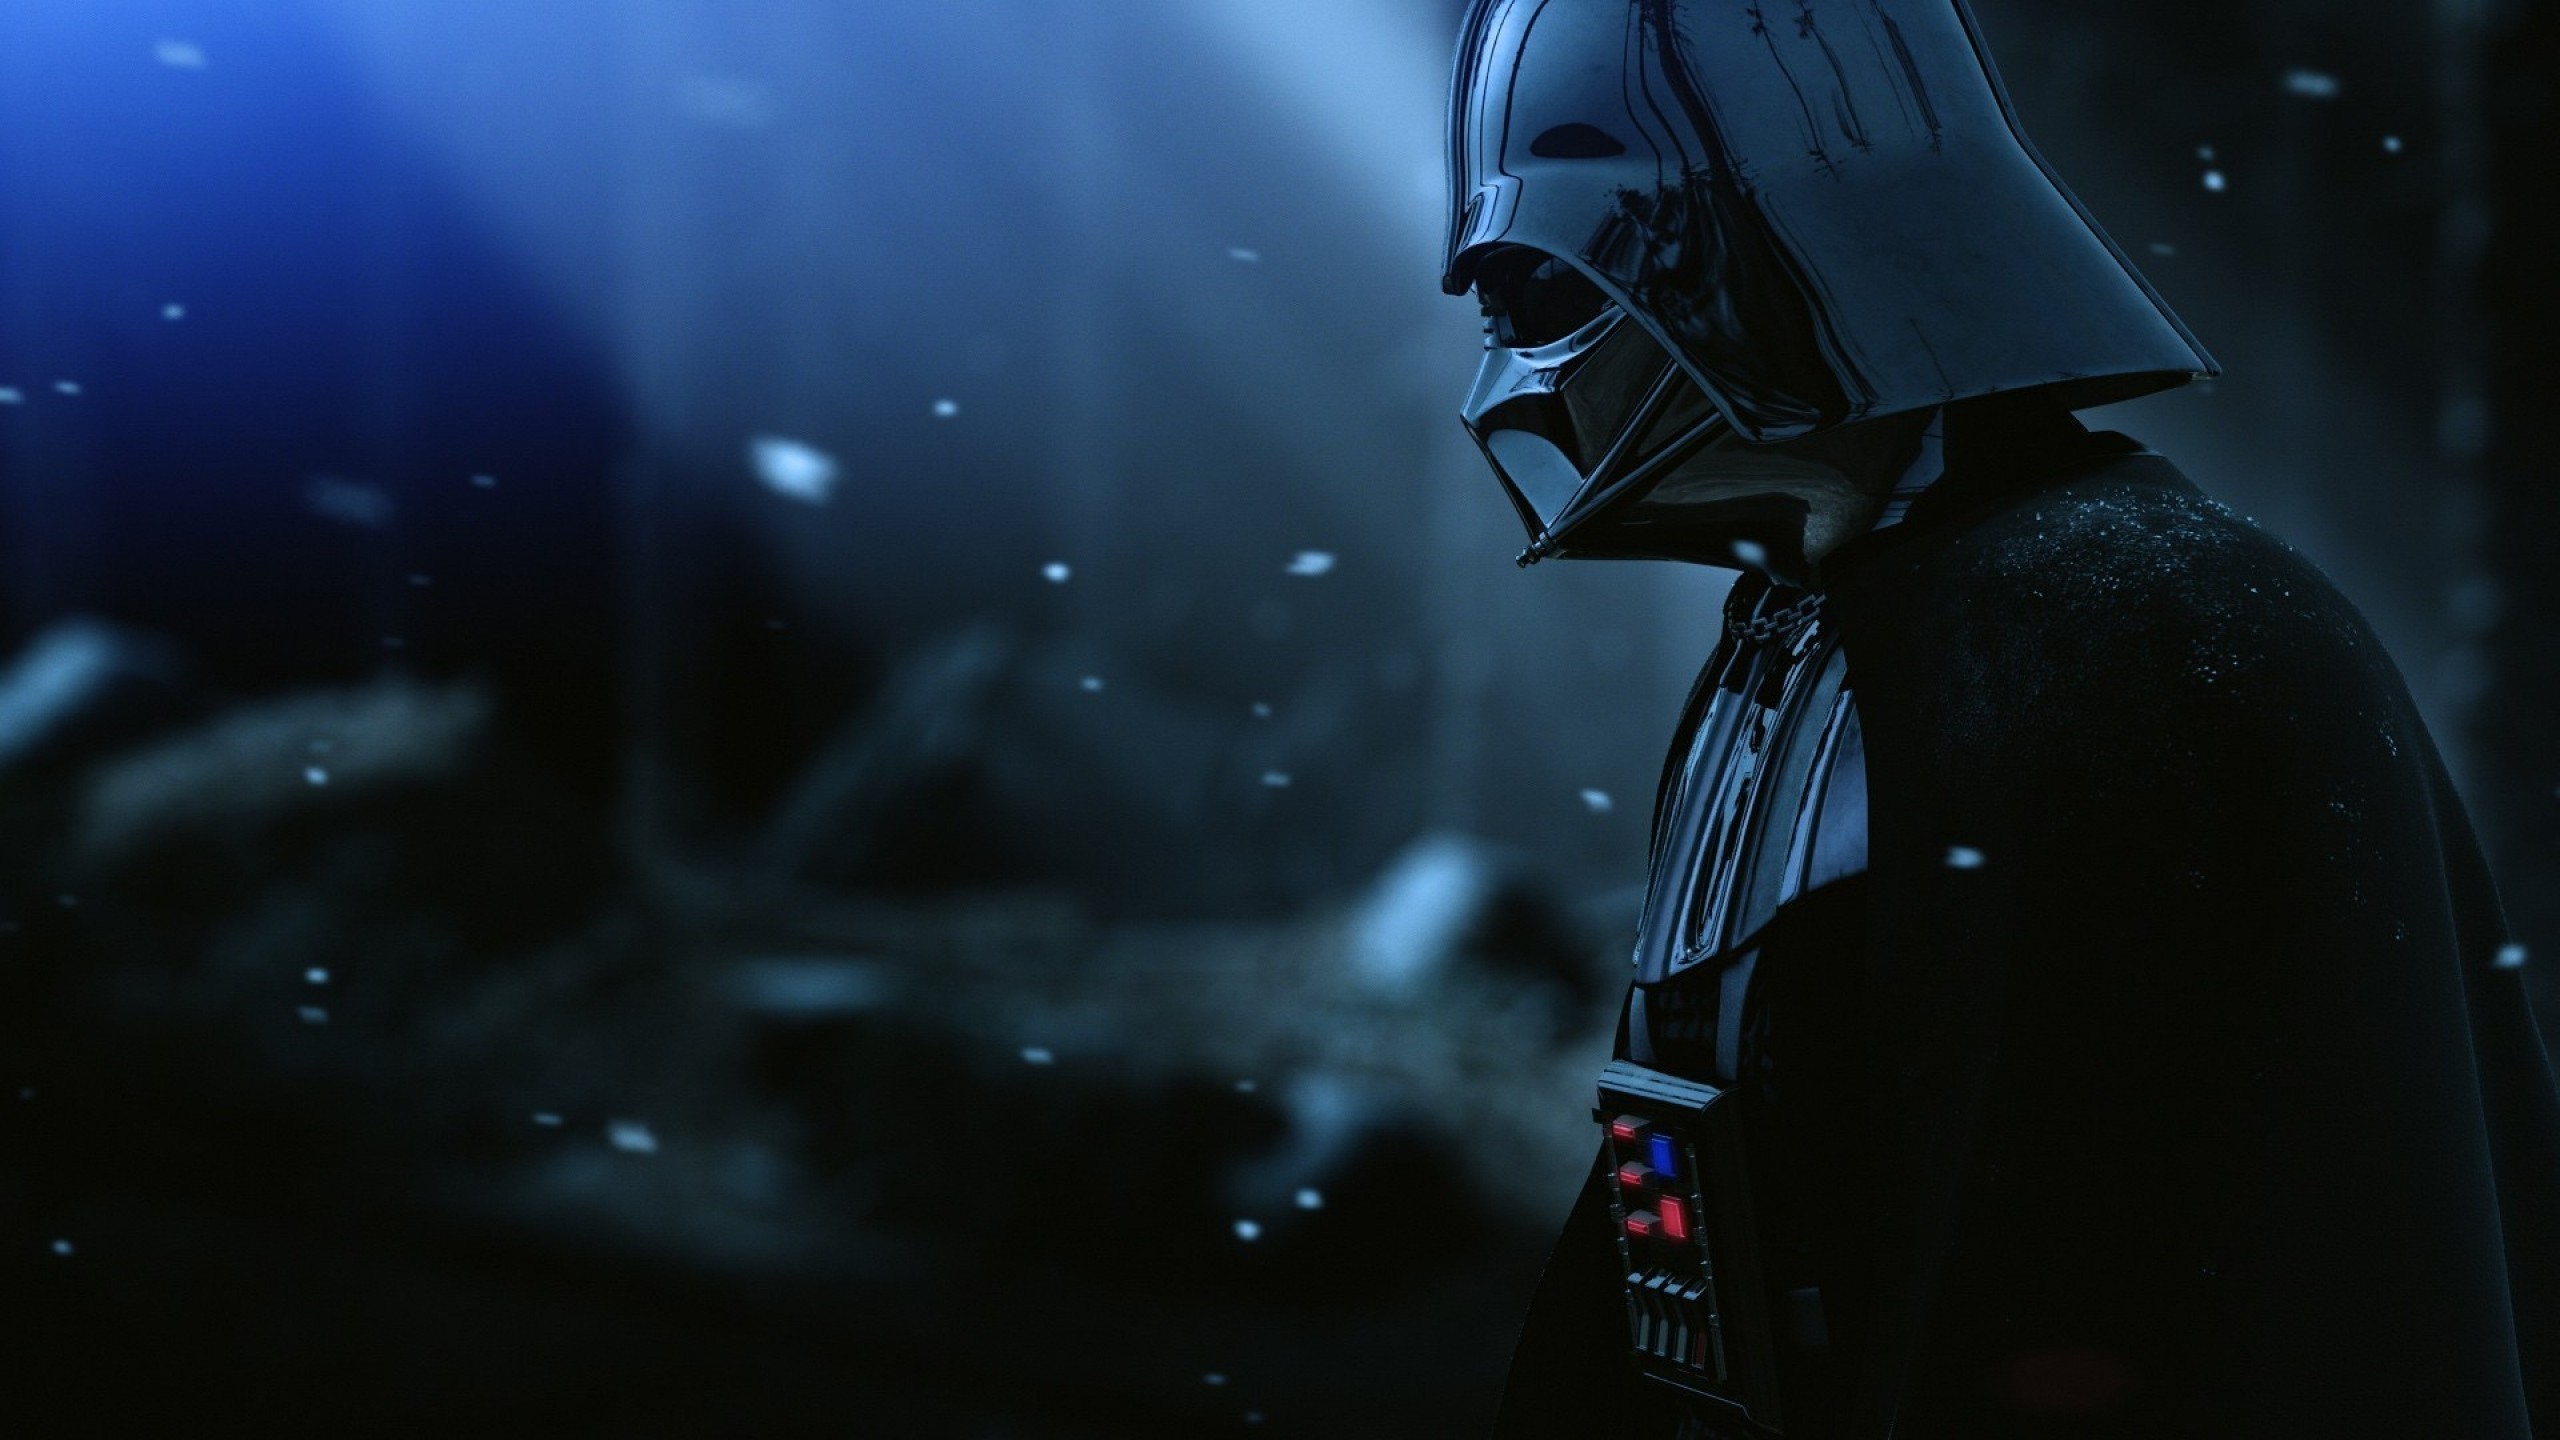 General 2560x1440 Star Wars Darth Vader Star Wars Villains Sith video games science fiction